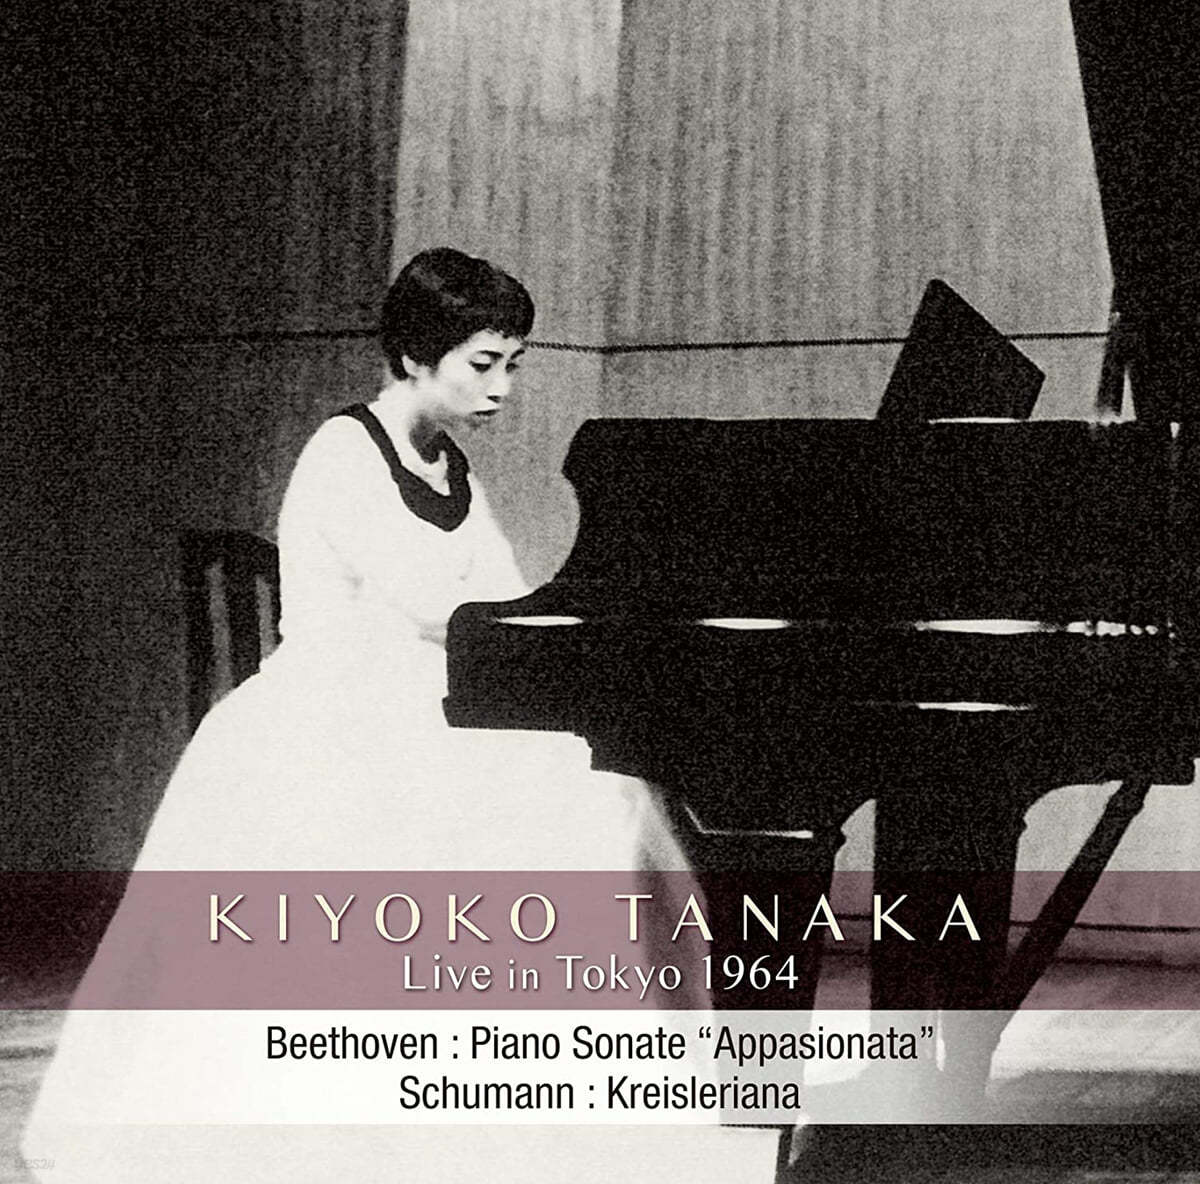 Kiyoko Tanaka 기요코 타나카 - 1964년 도쿄 라이브 콘서트 (Live in Tokyo 1964) 